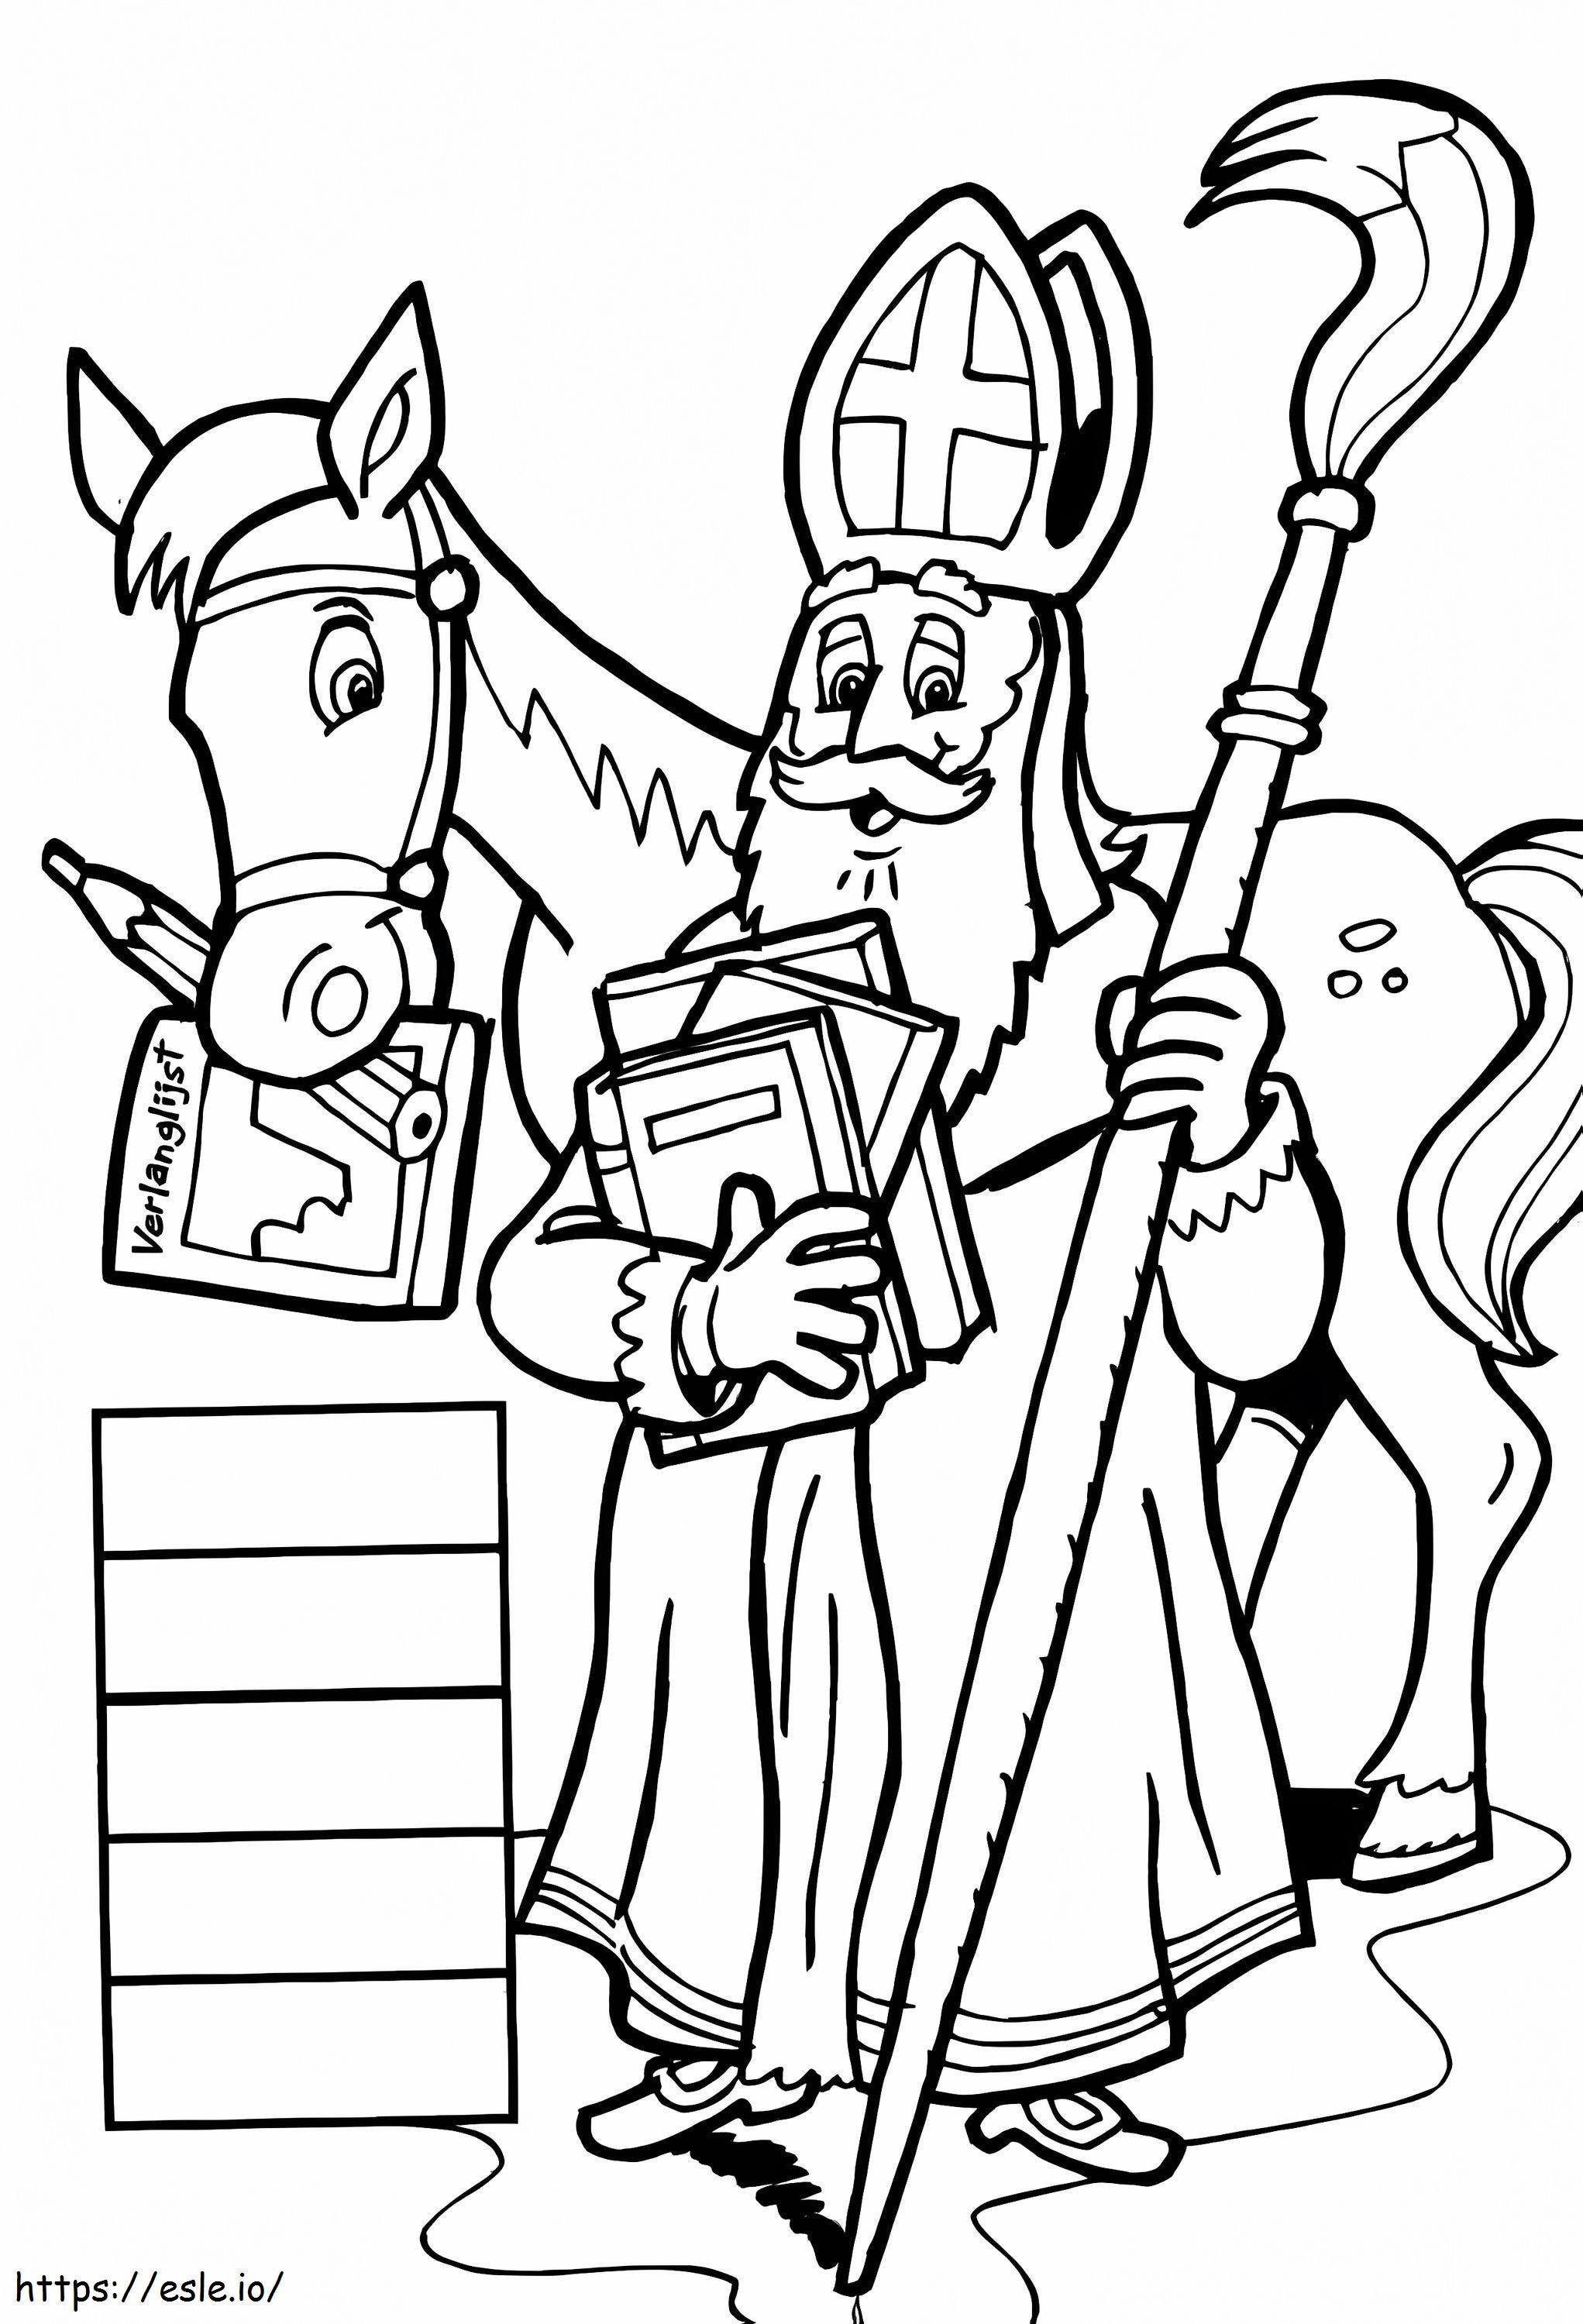 Saint Nicholas And Horse coloring page